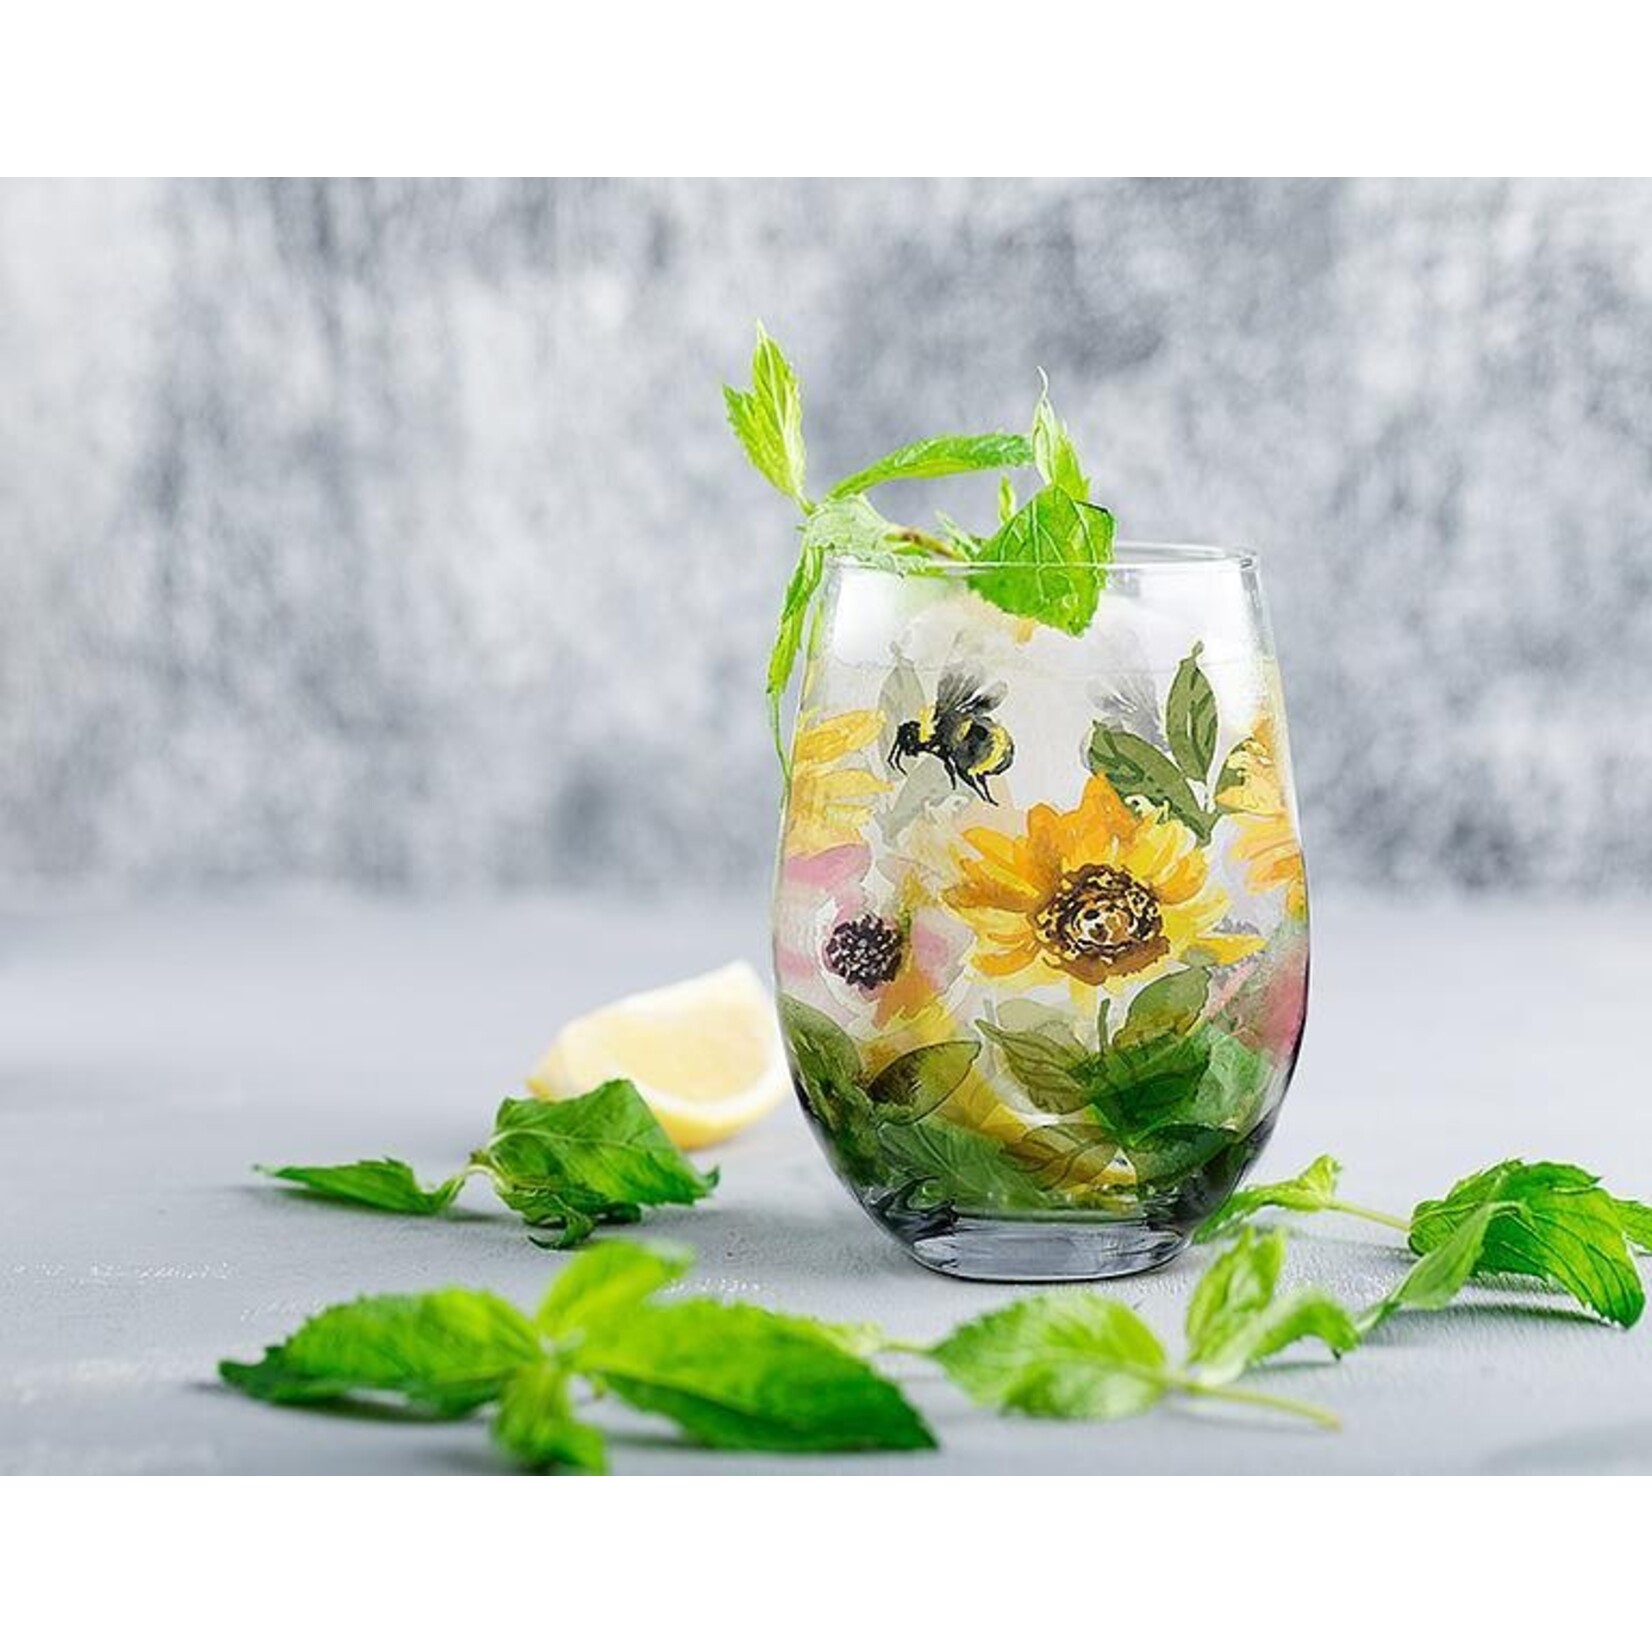 Abbott Stemless Wine Glass - Sunflowers & Bees